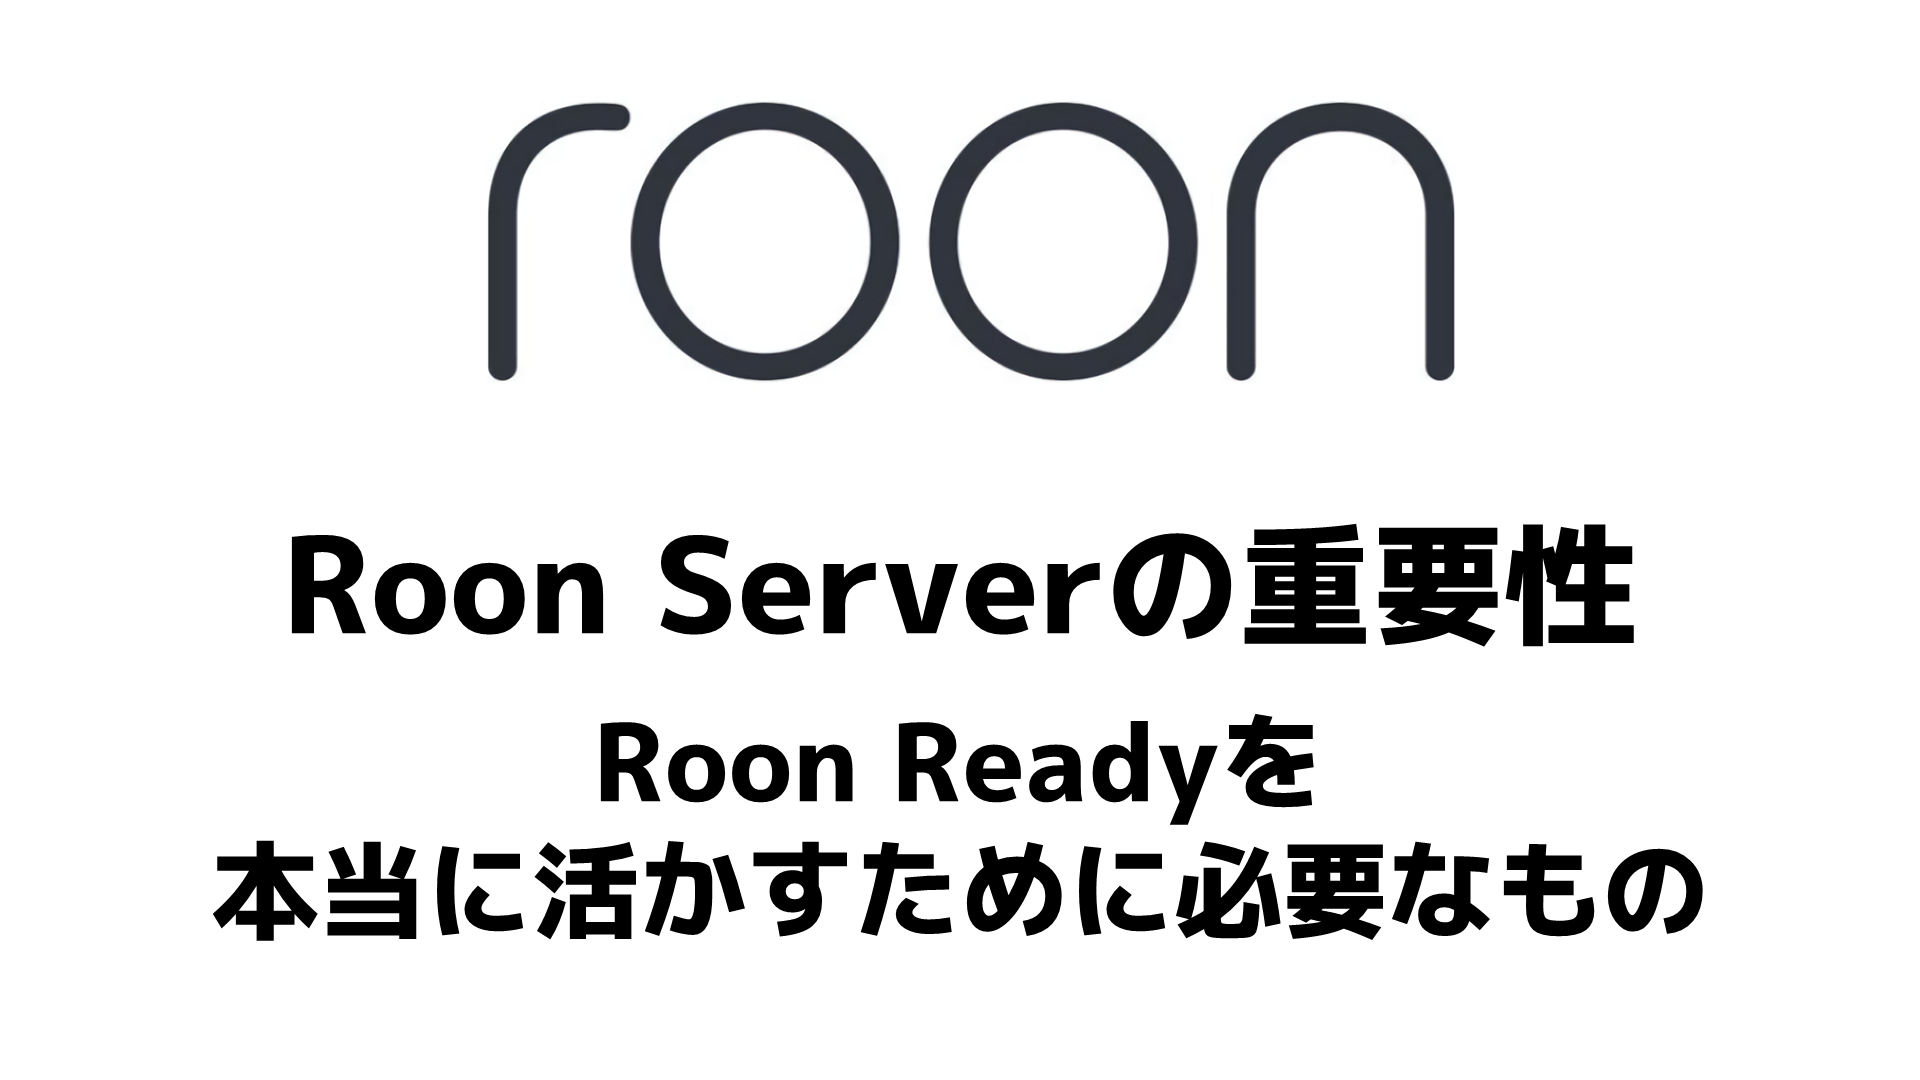 Litterær kunst sende edderkop Roon Serverの重要性――Roon Readyを本当に活かすために必要なもの - Audio Renaissance